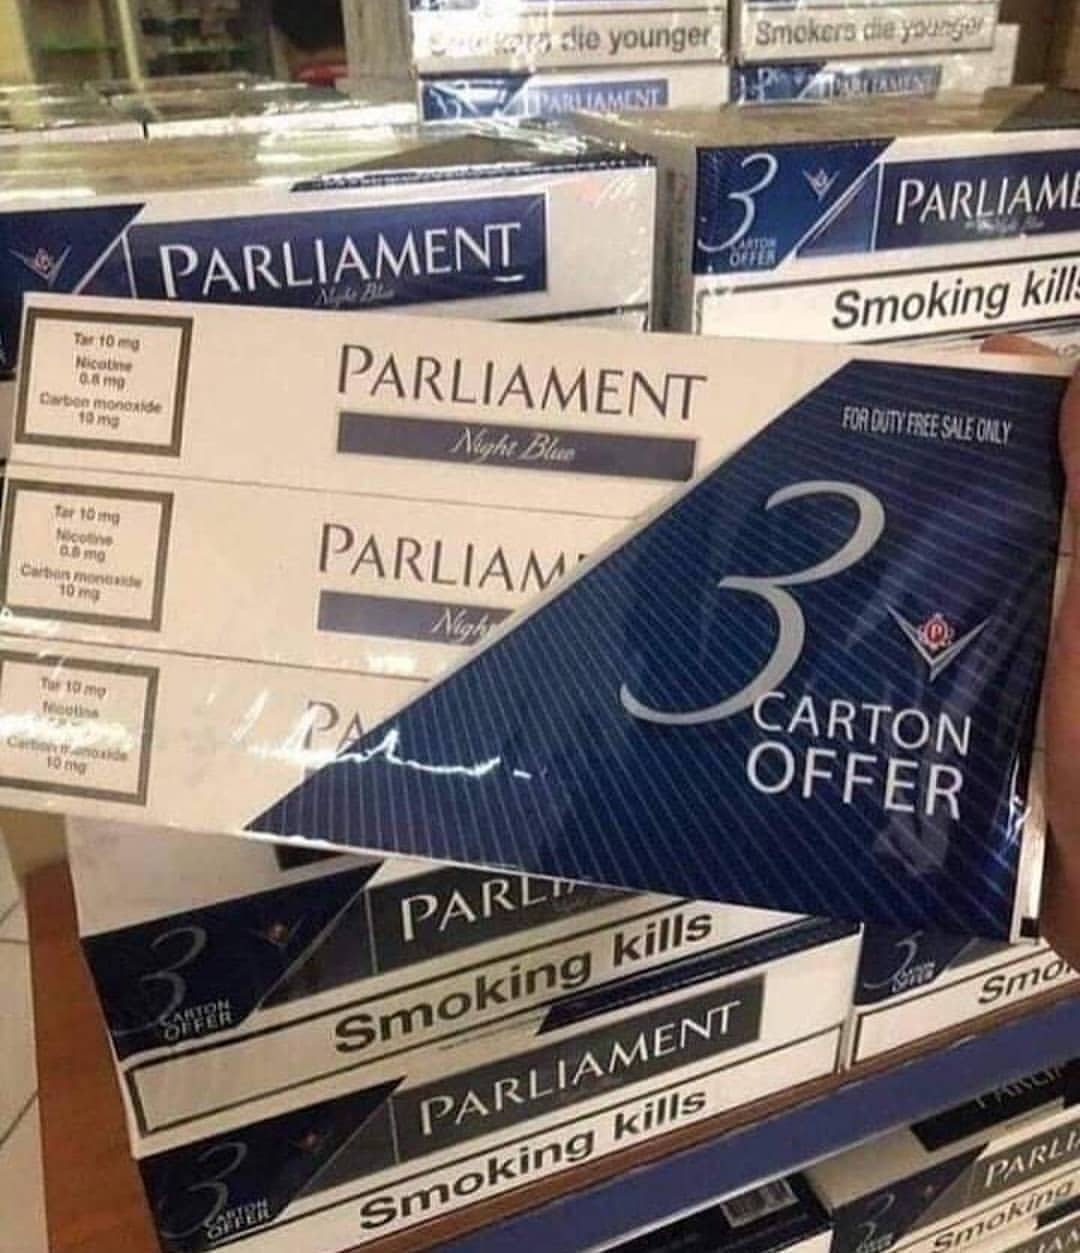 Parliament Night Blue